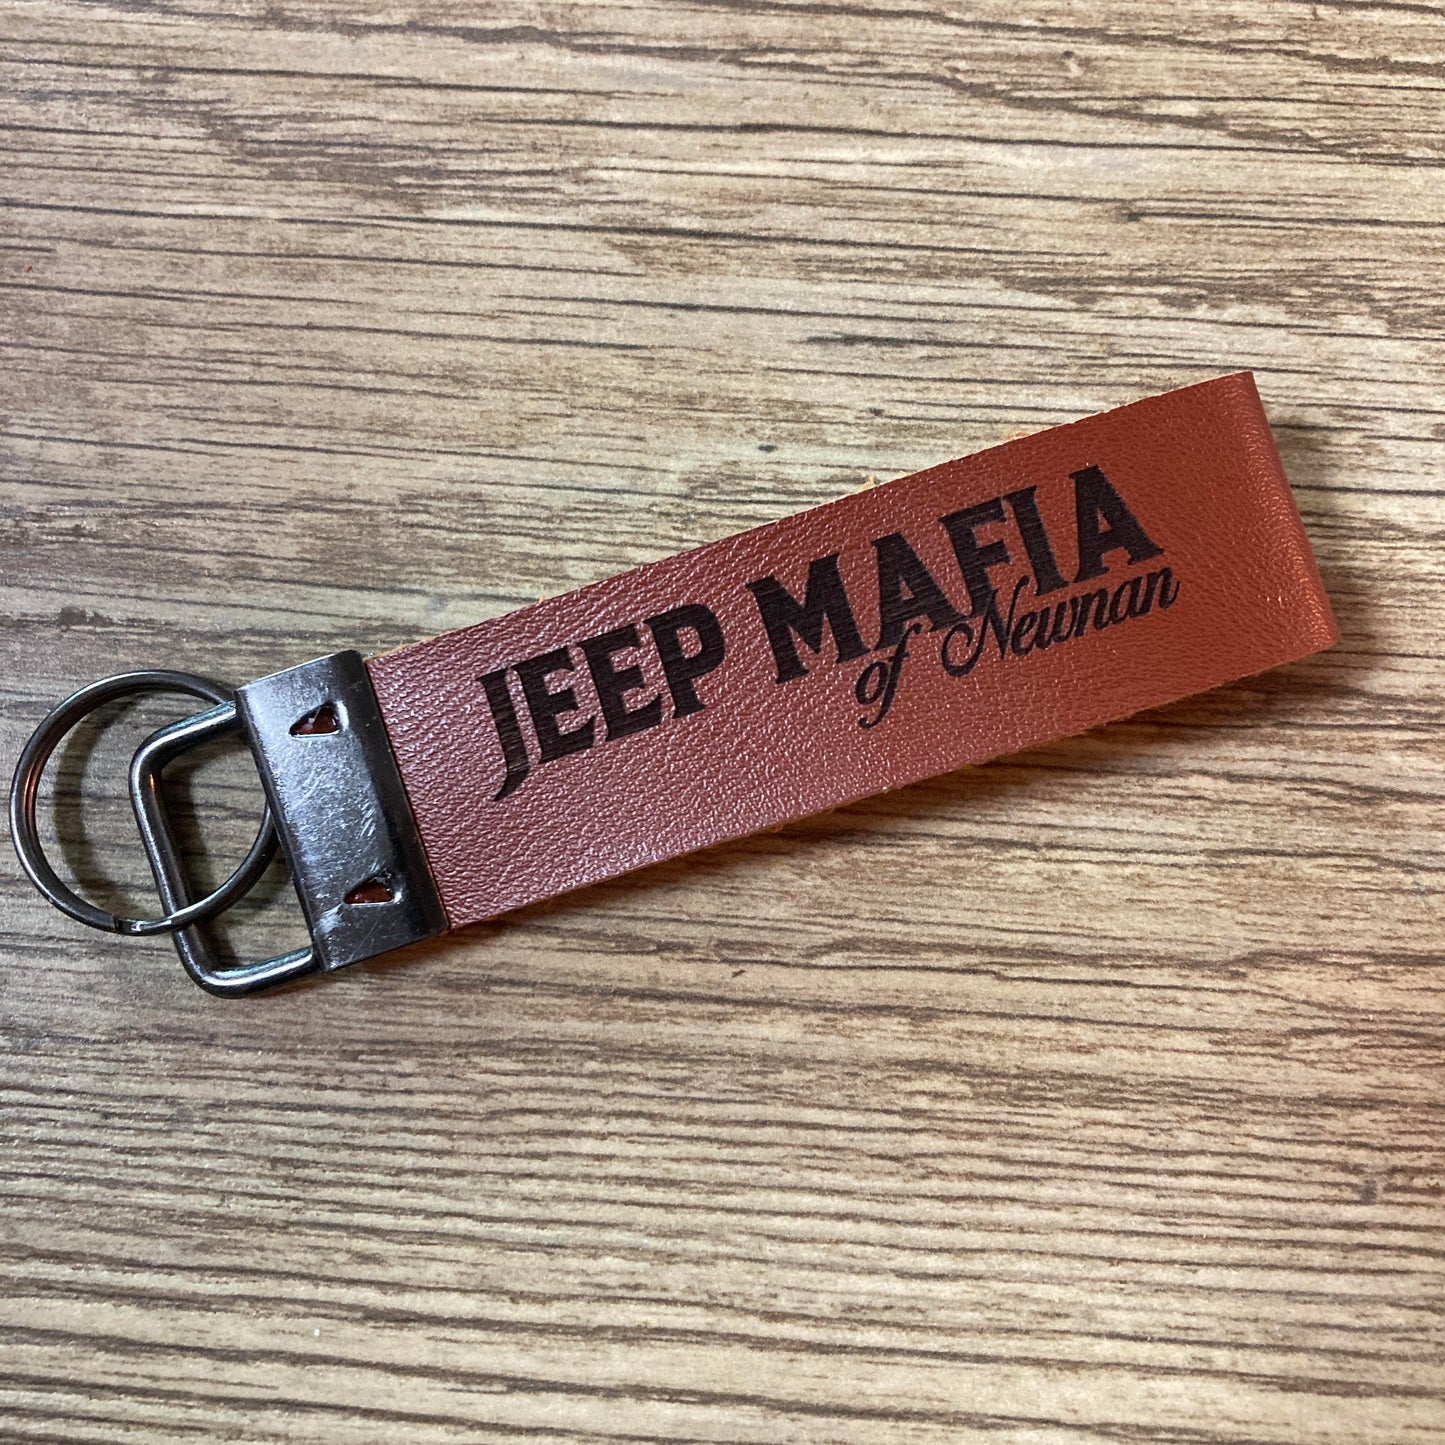 Jeep Mafia of Newnan Leather Keychain